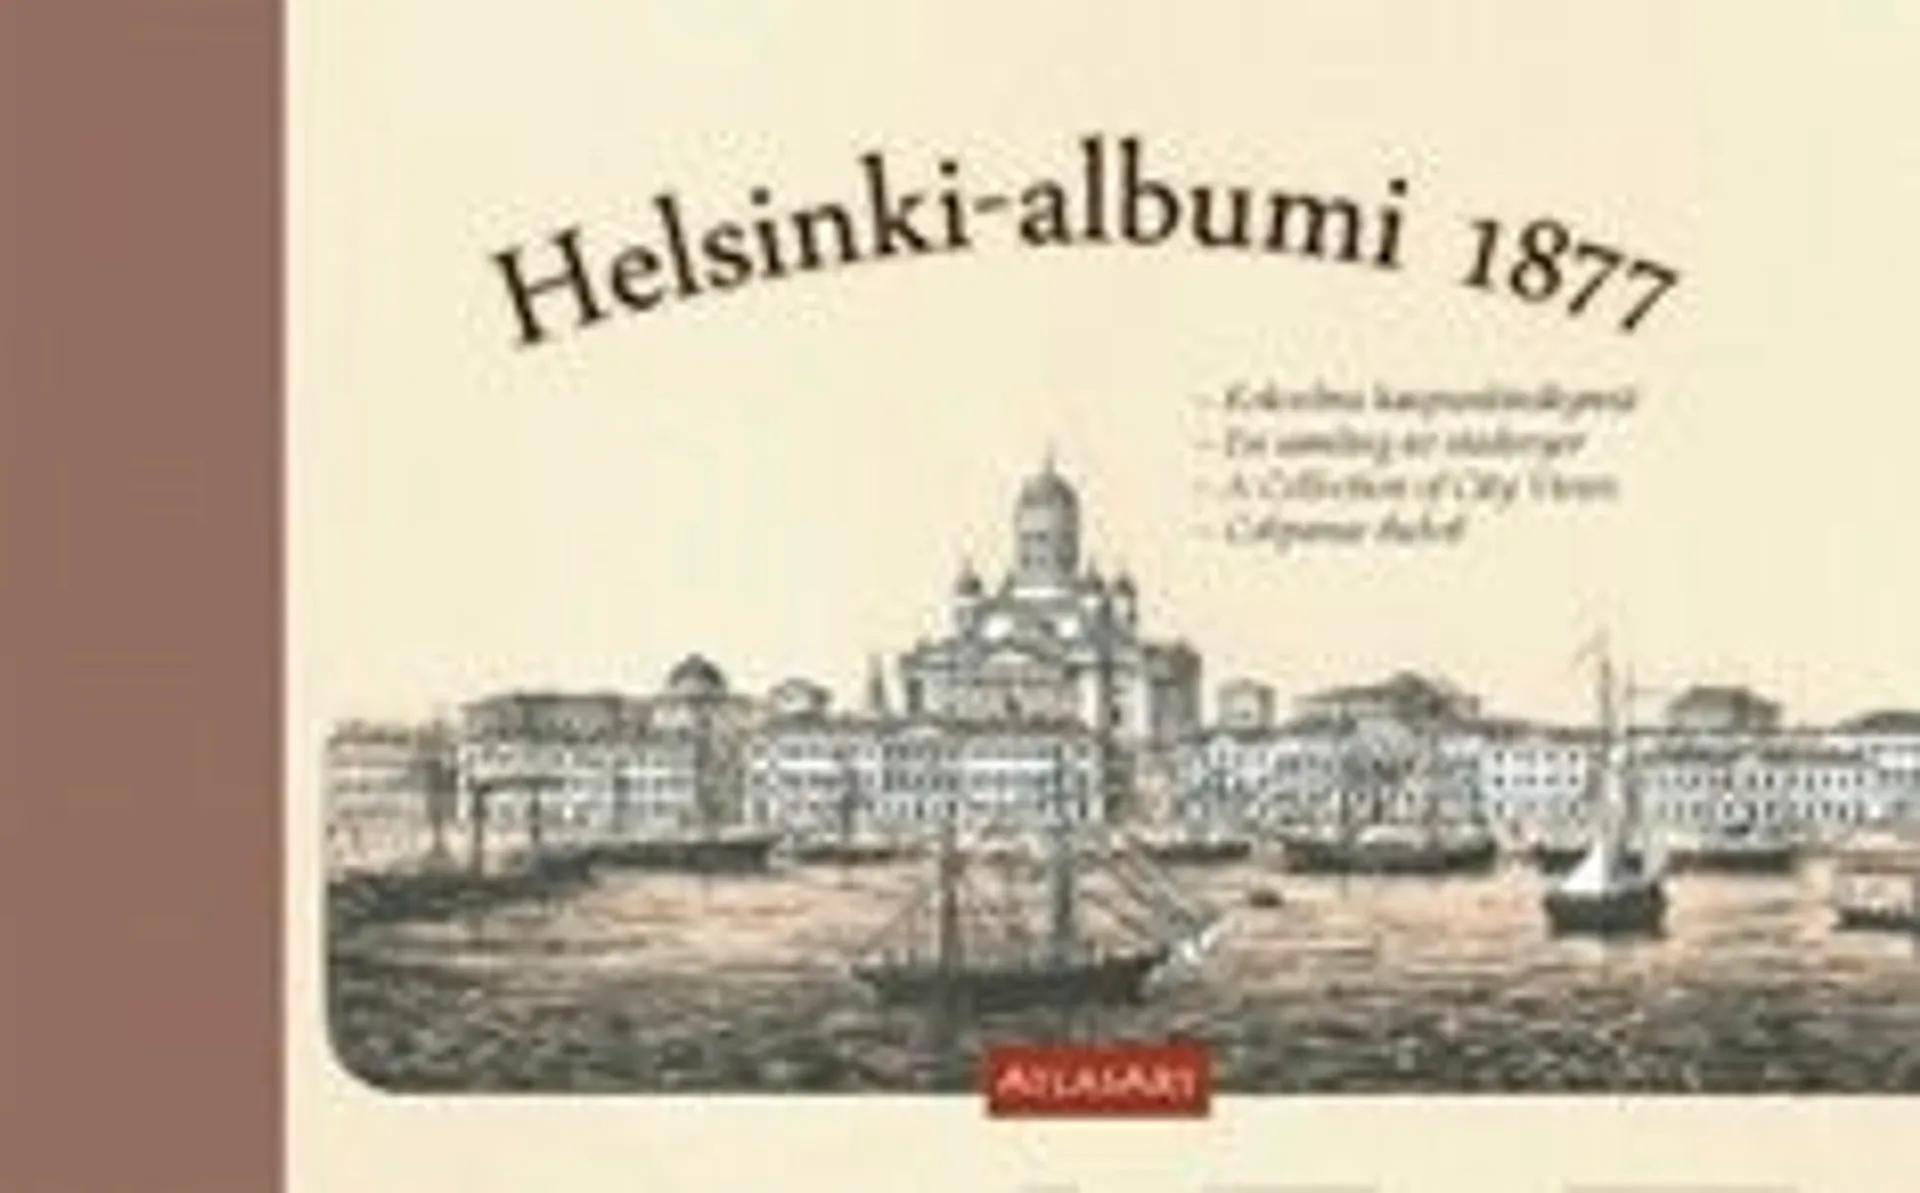 Helsinki-albumi 1877